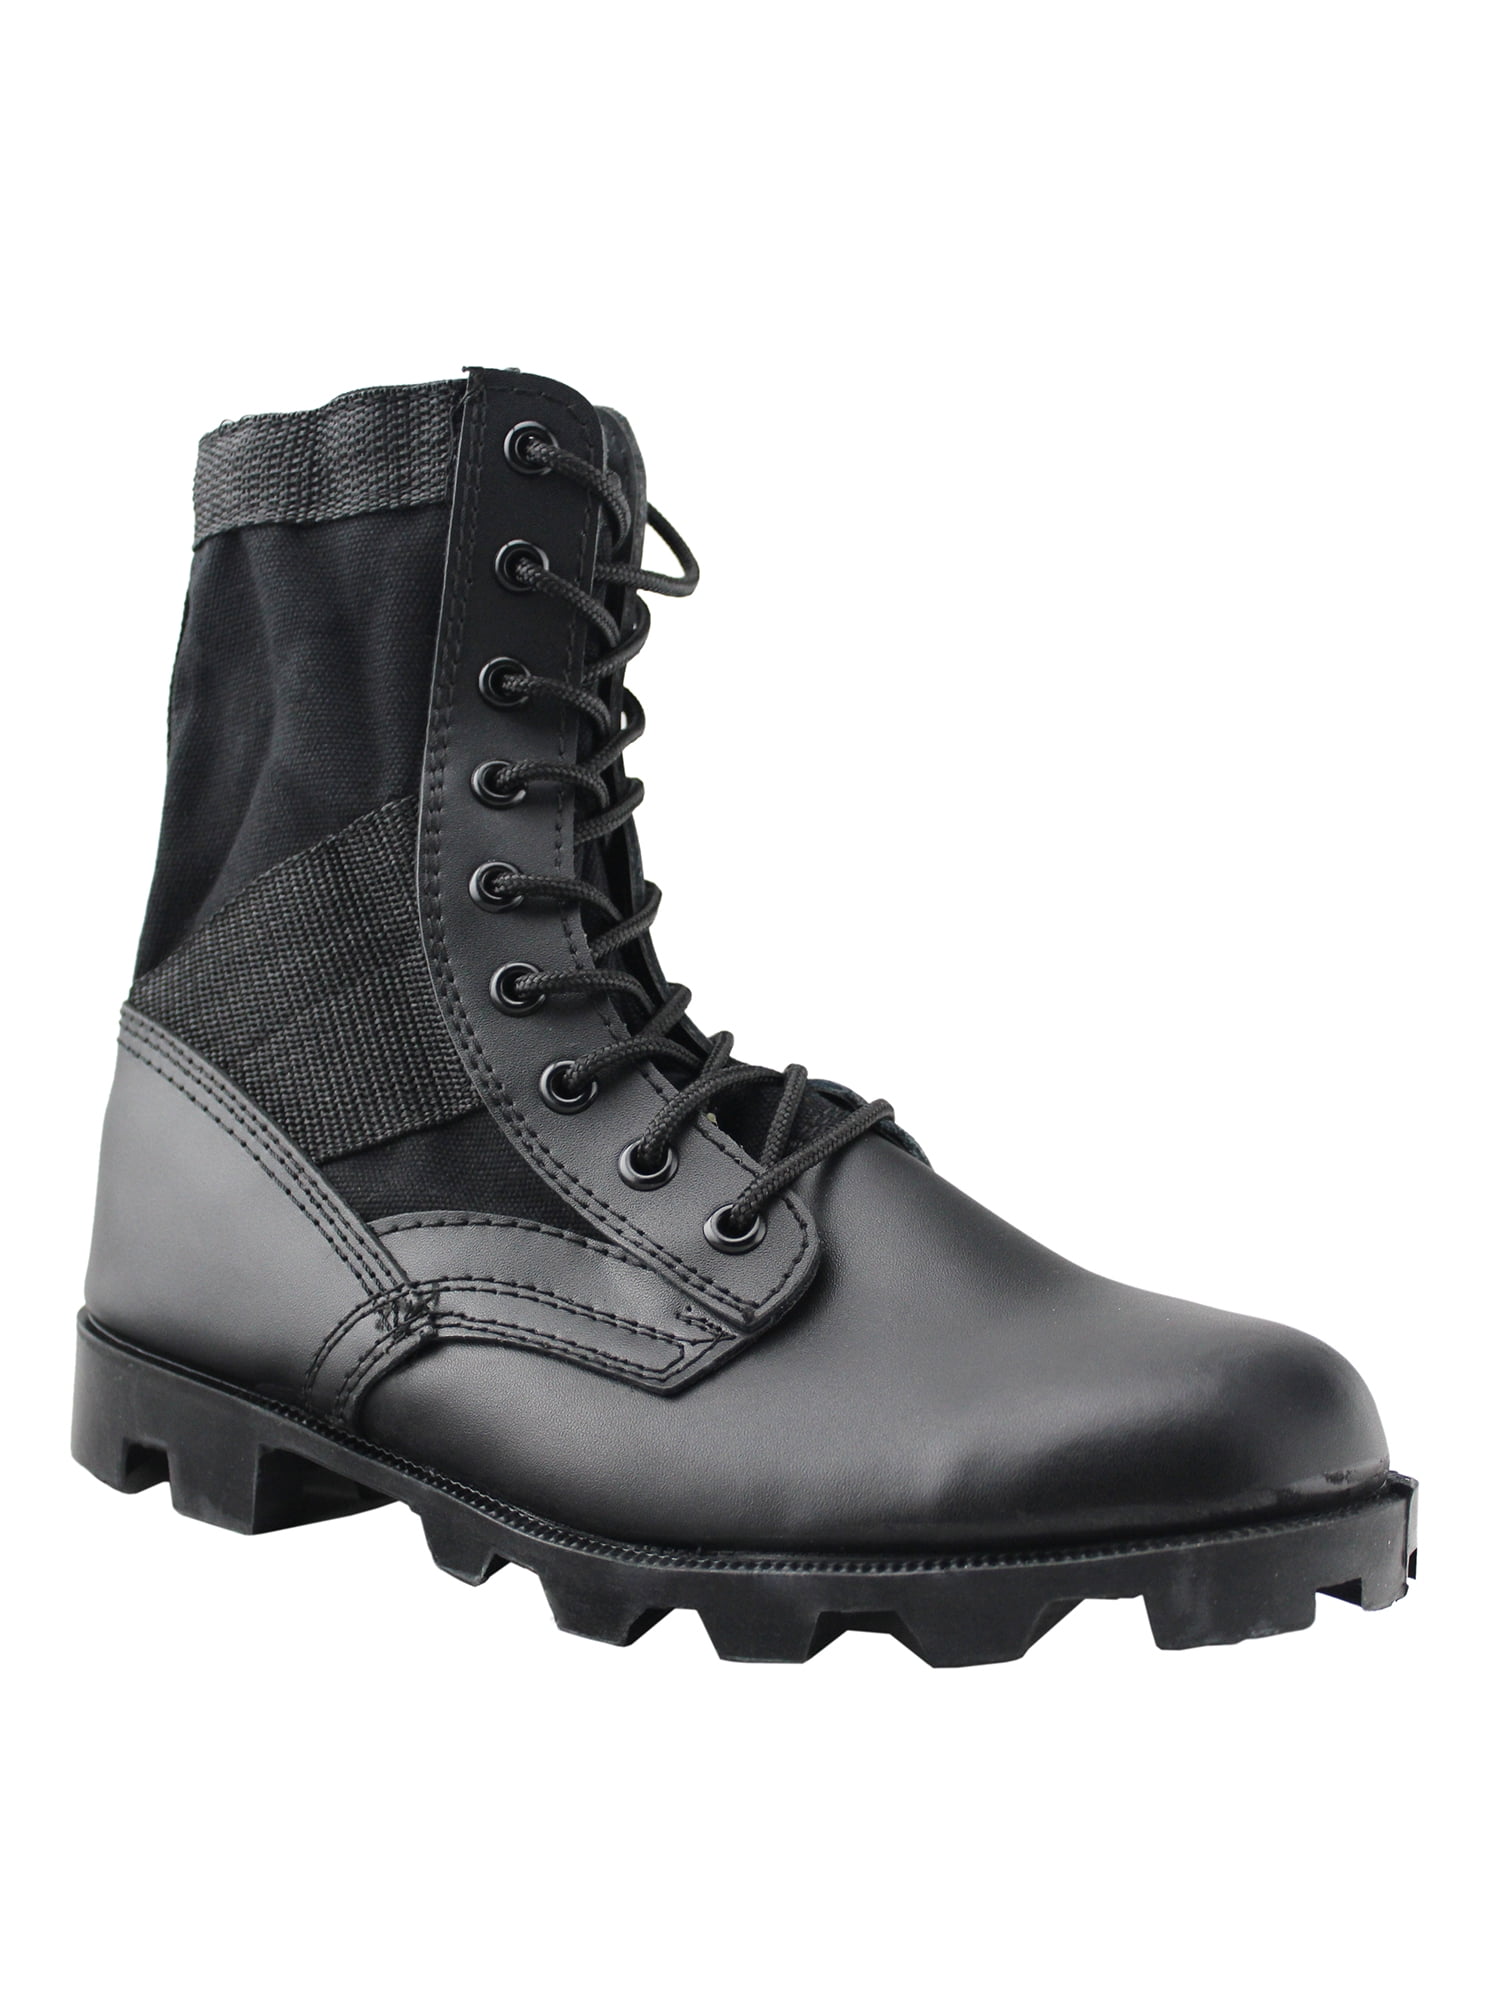 slip resistant combat boots